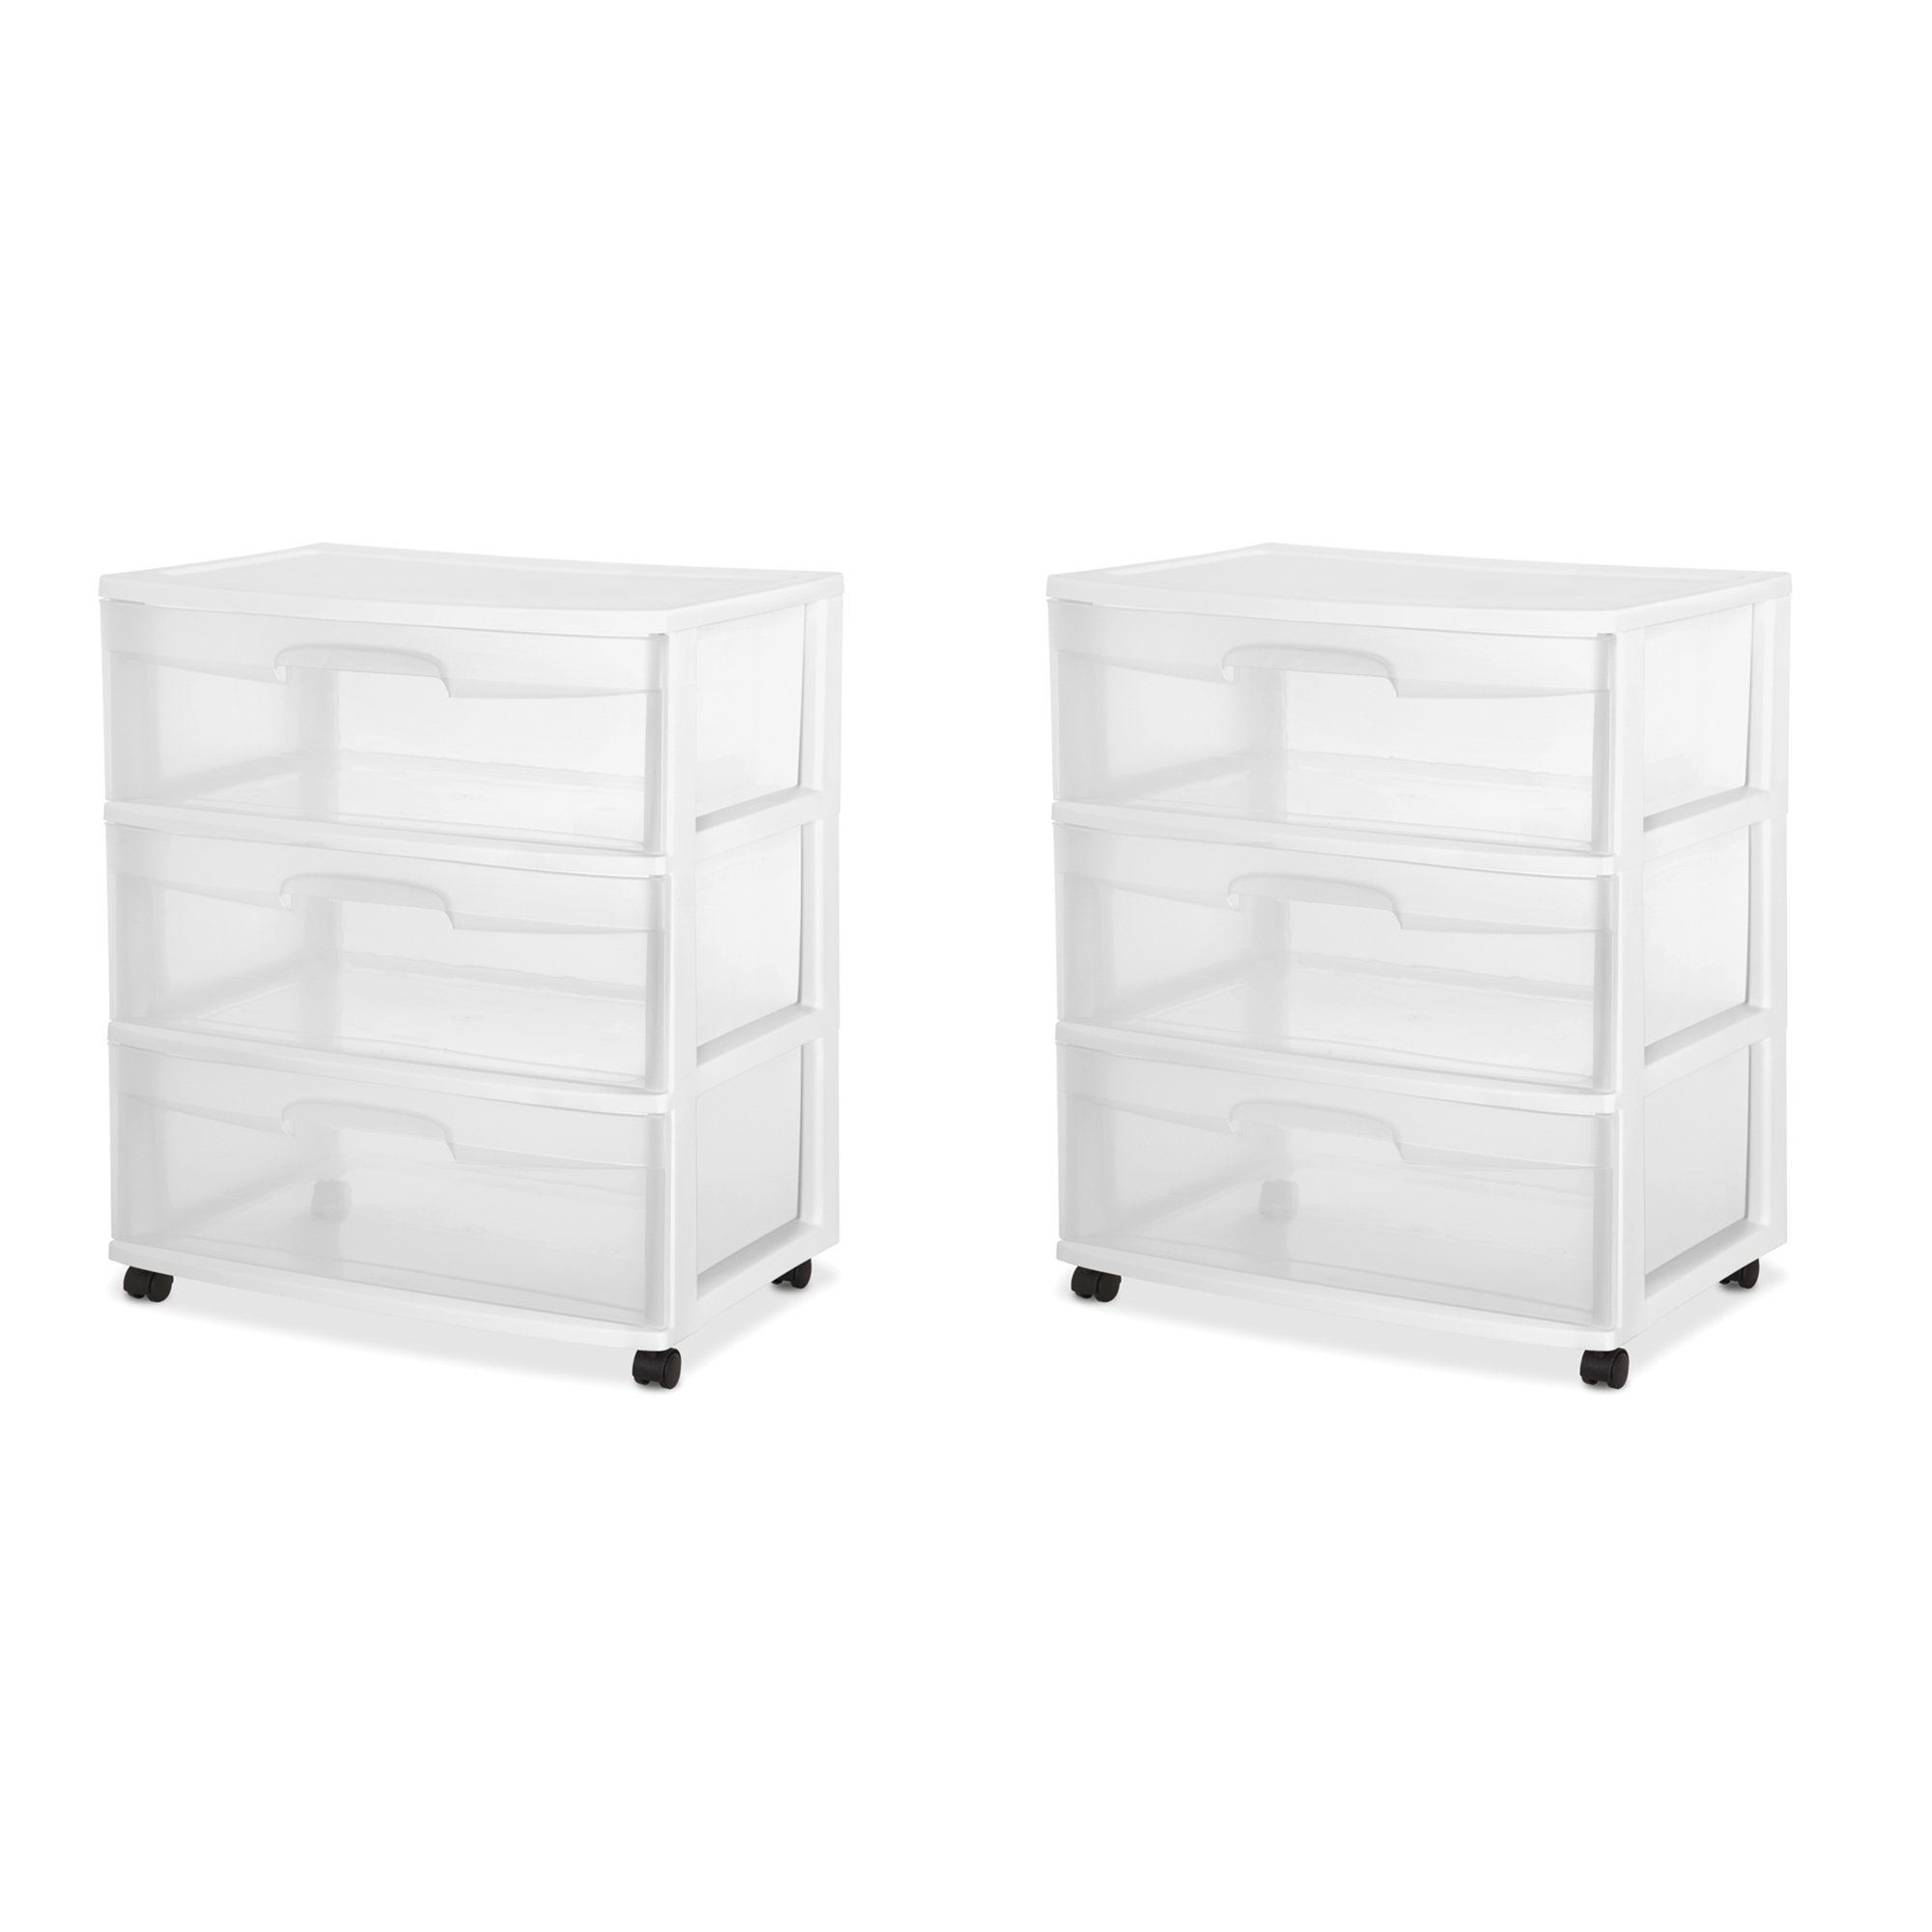 Bedroom Dresser Storage Plastic Clothes Organizer Cabinet 3 Drawer Chest 2 PACK 